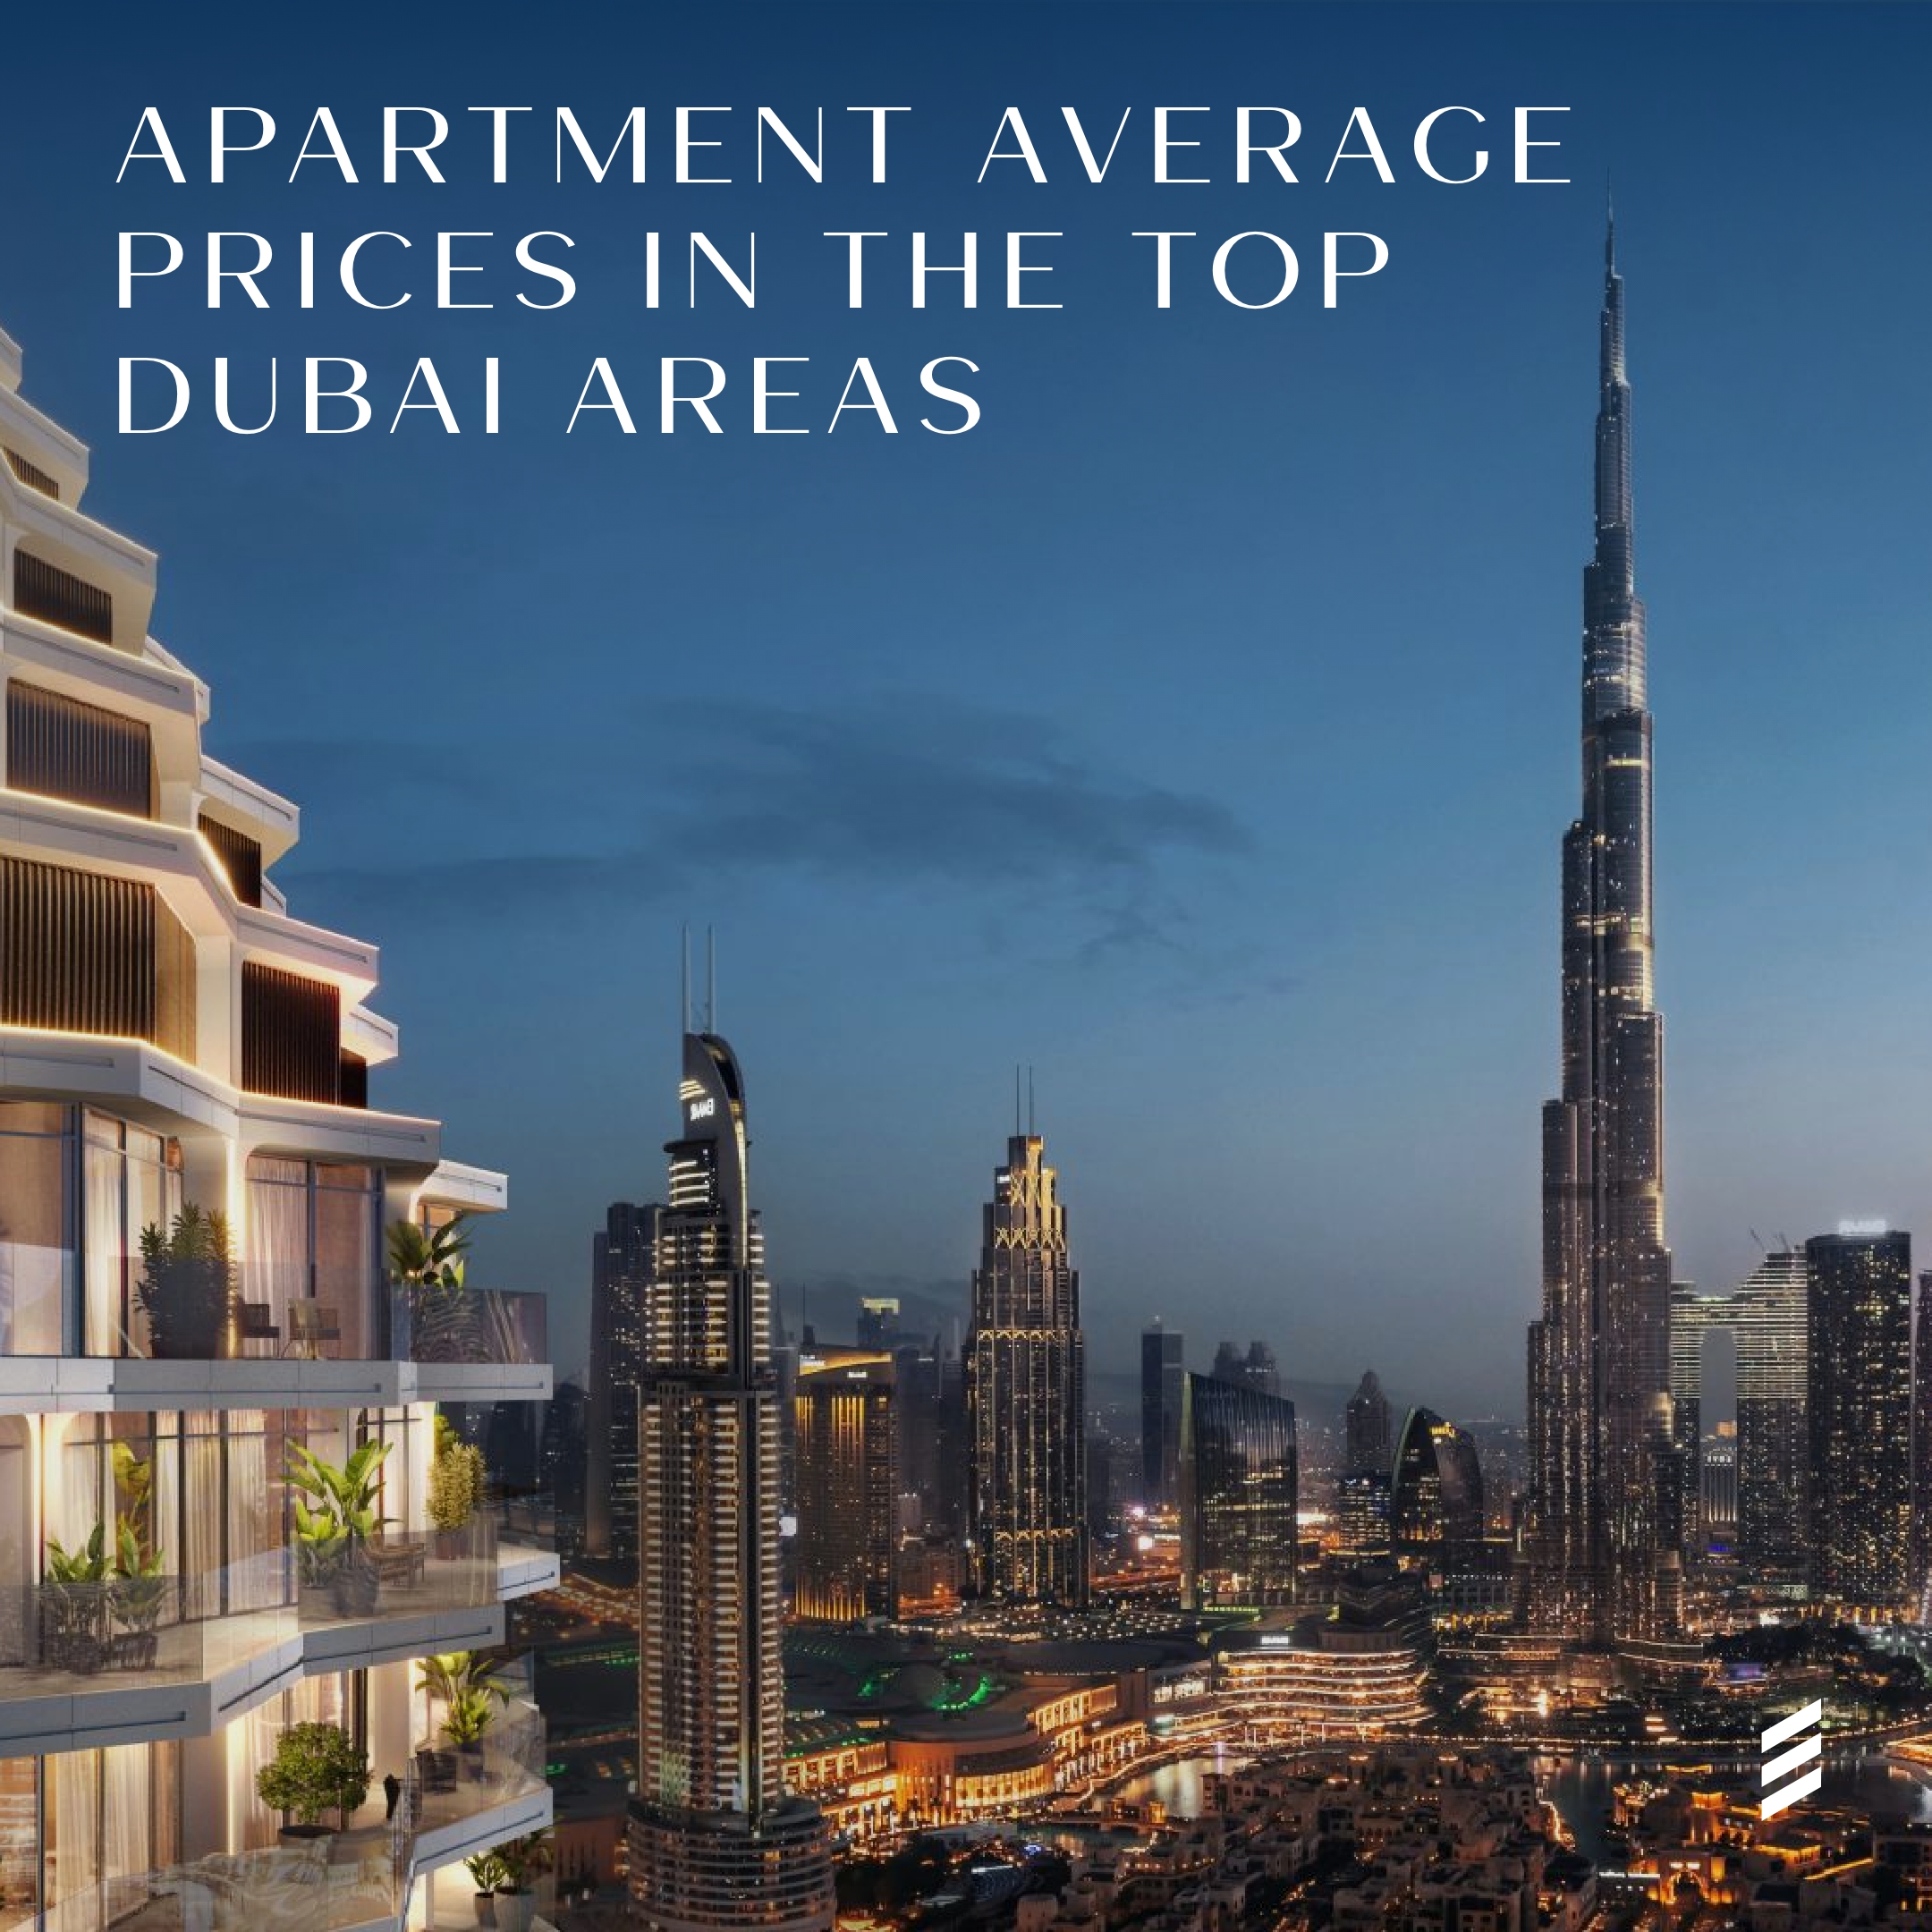 Dubai Properties-Apartment Average Prices in the top Dubai Areas